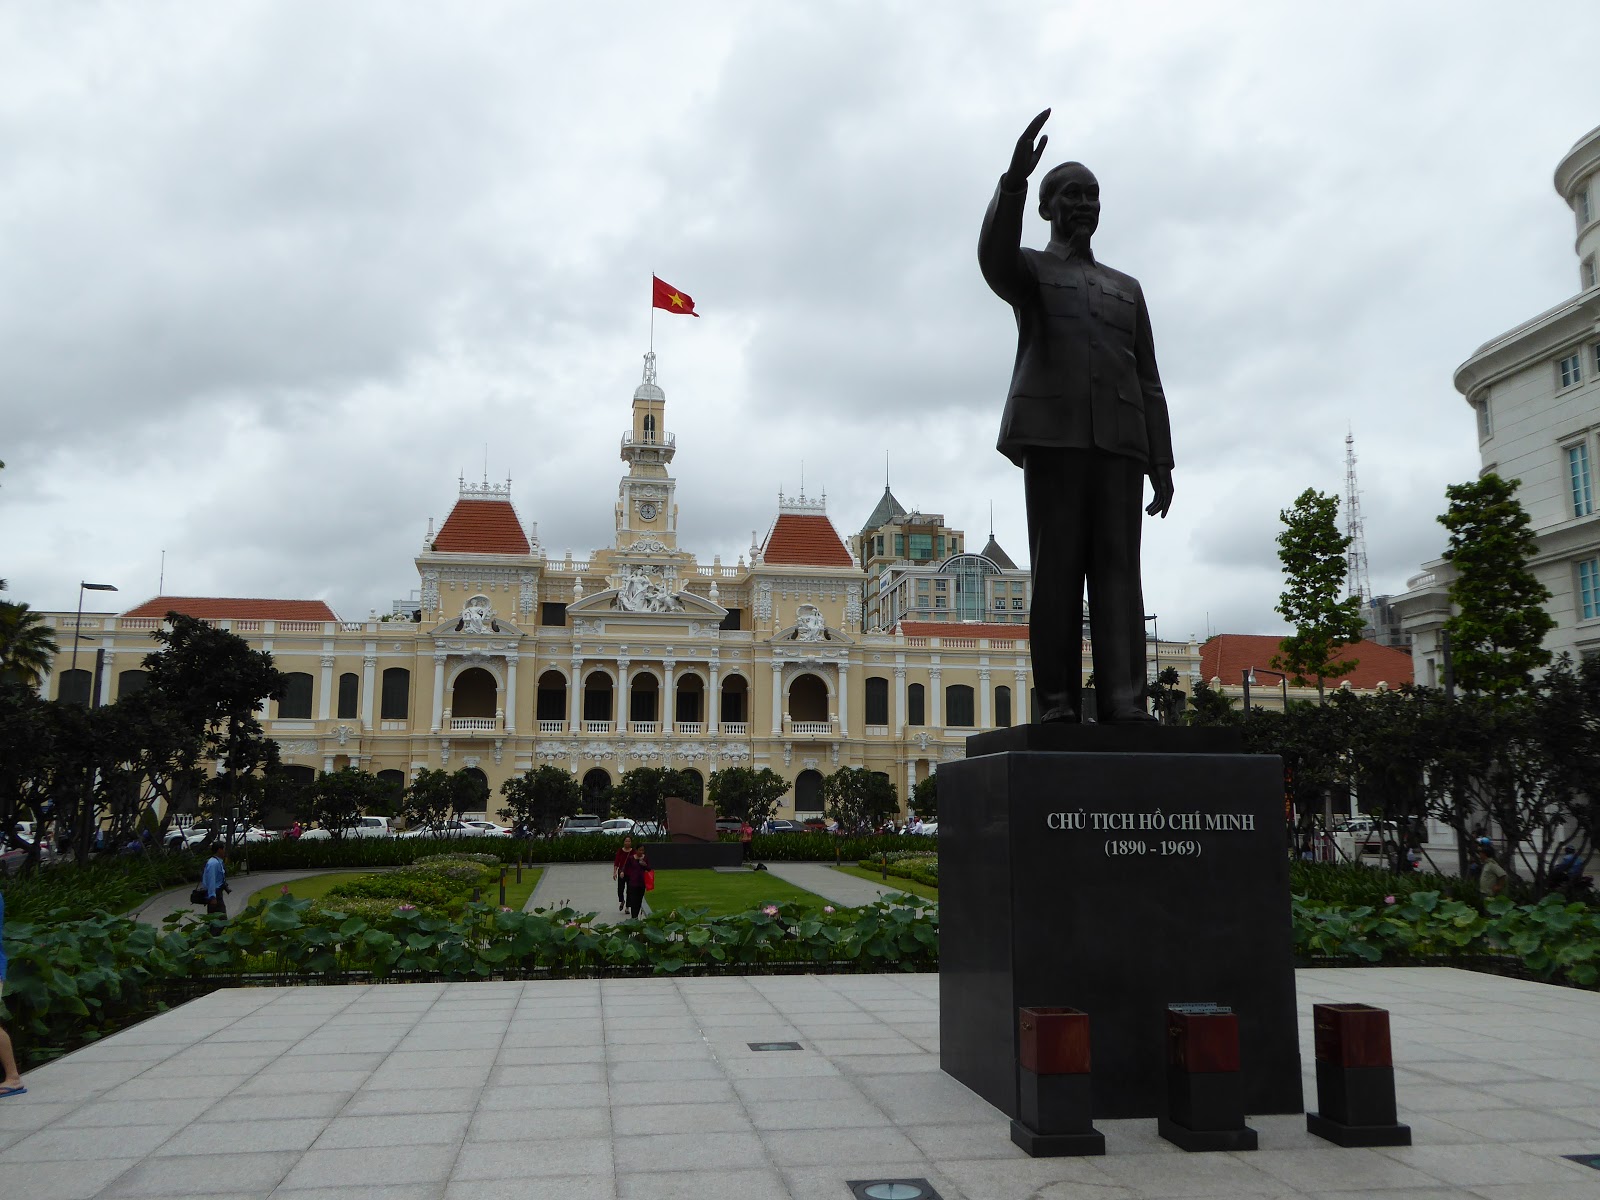 Día 2: Ho Chi Minh y rumbo a Can Tho (delta del Mekong) - Vietnam. 19 dias. Consejos, detalles y etapas (5)